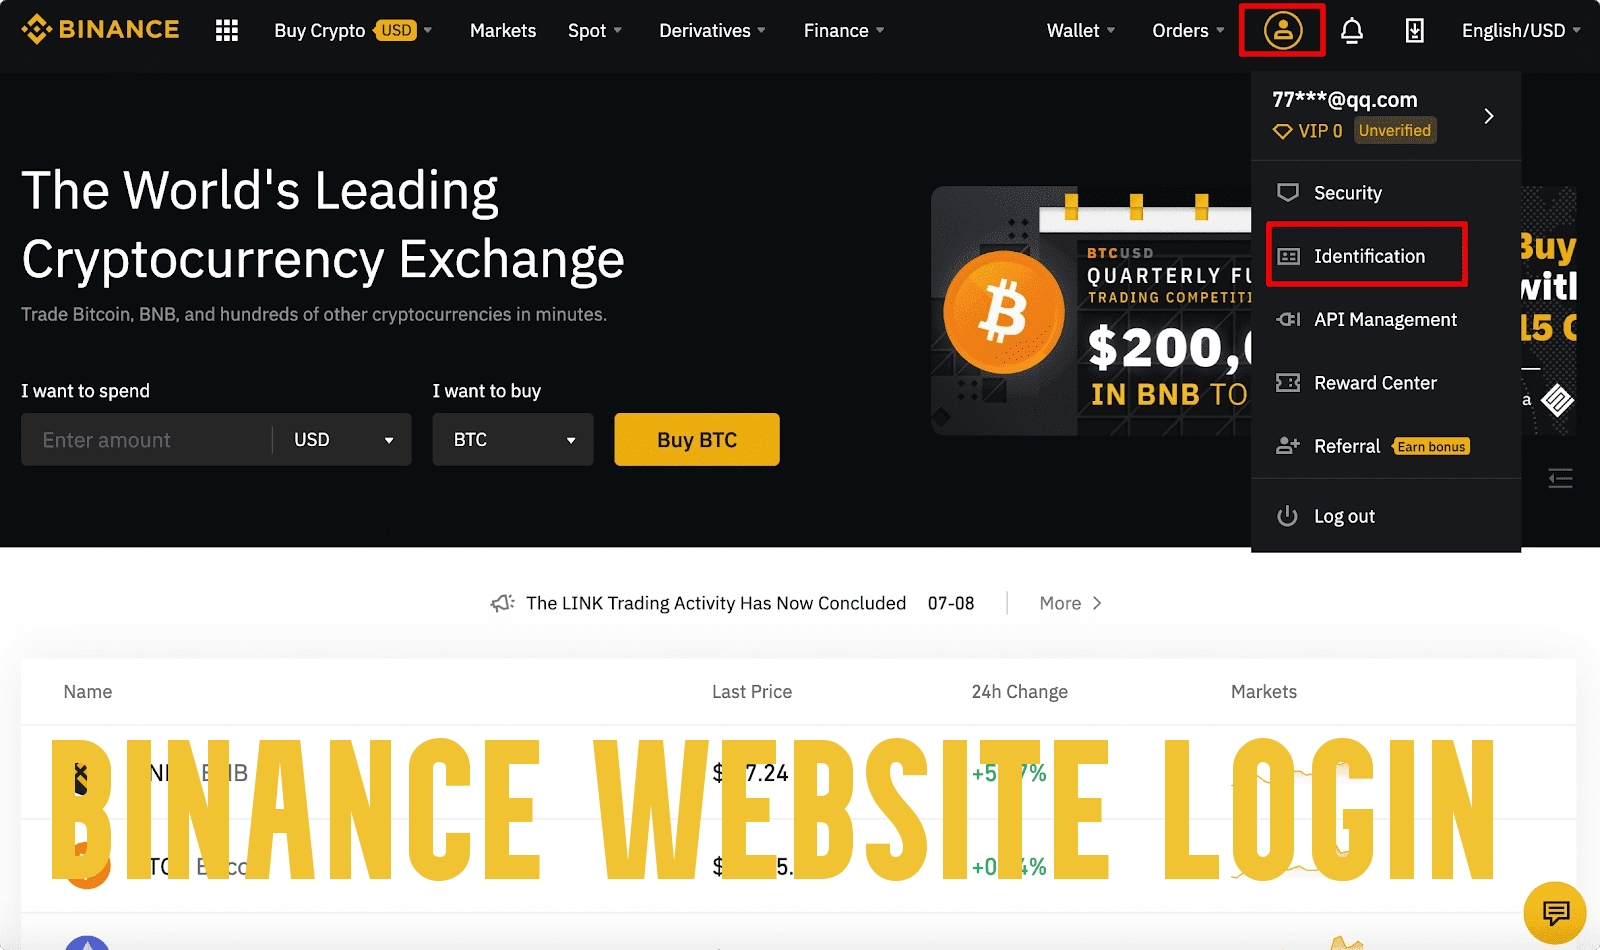 Binance Website Login 